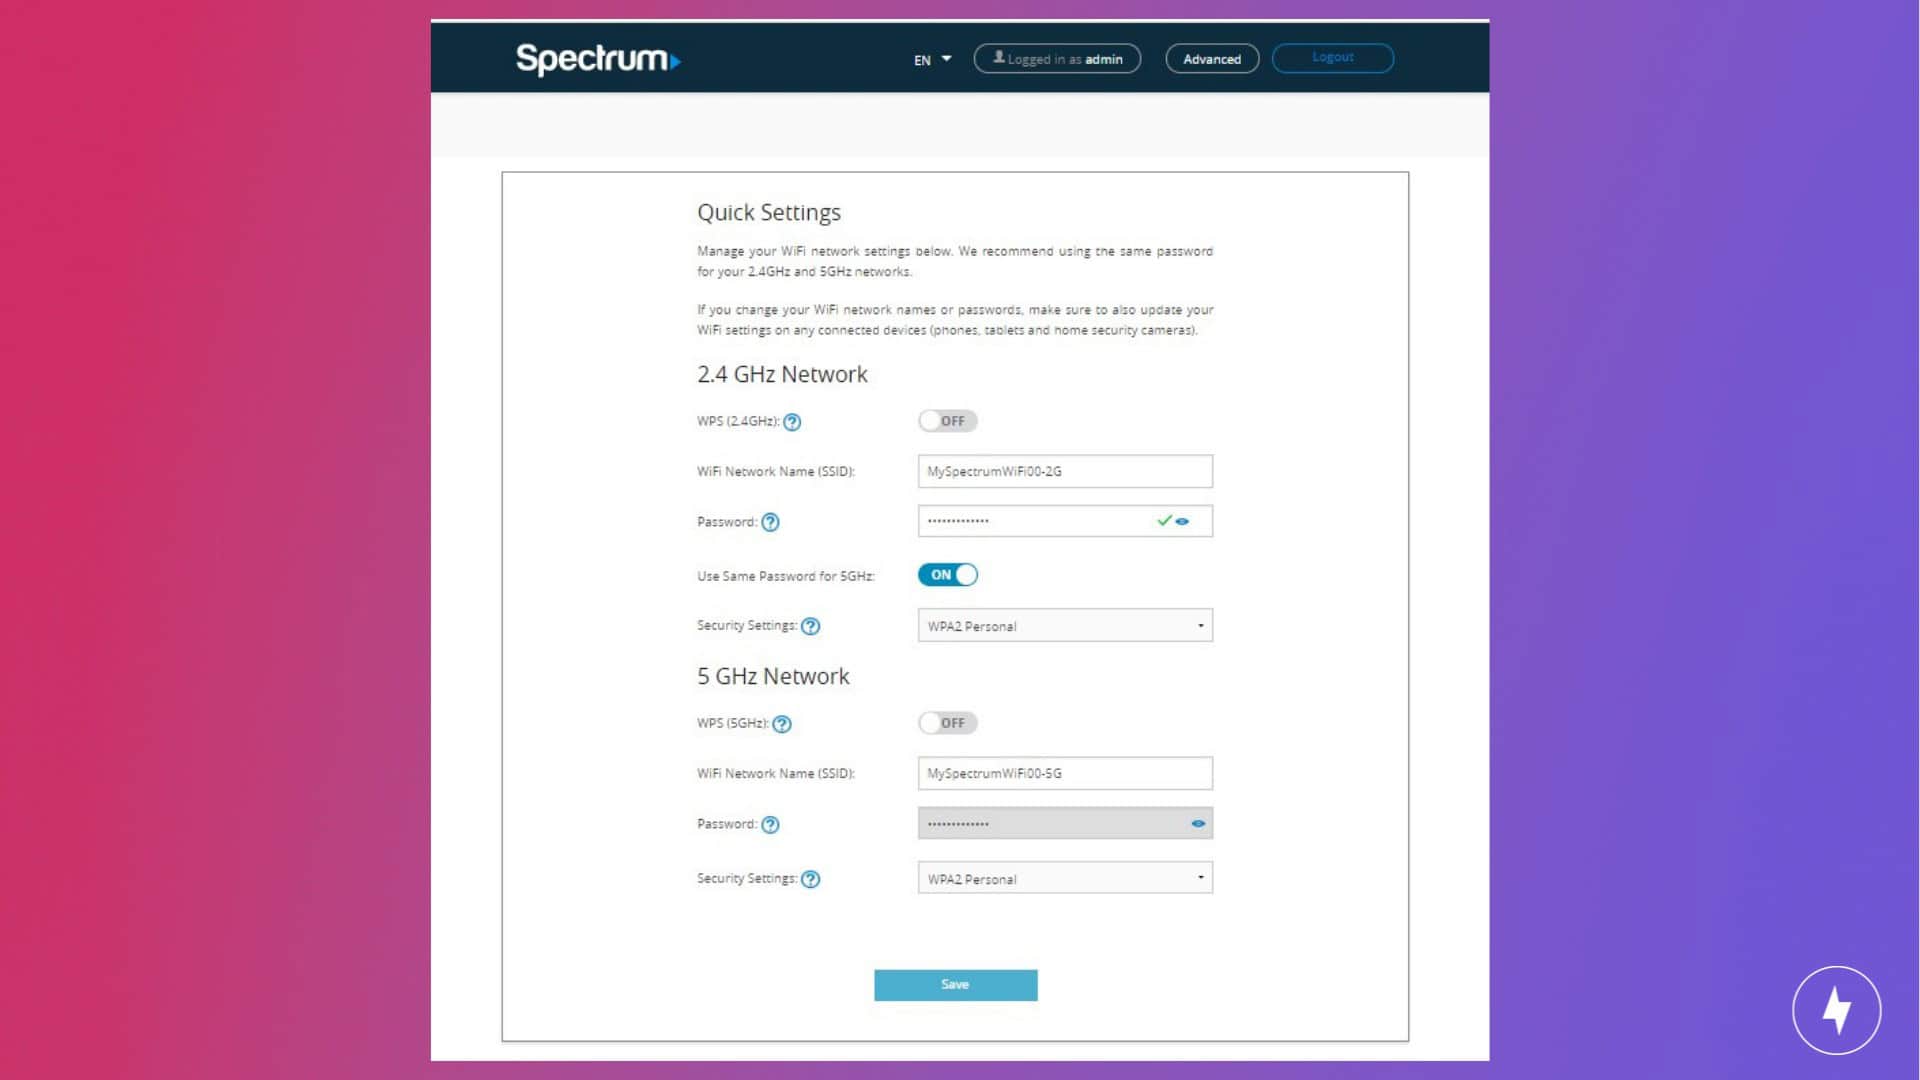 A screenshot of Spectrum's Wi-Fi settings using a Google Chrome browser.